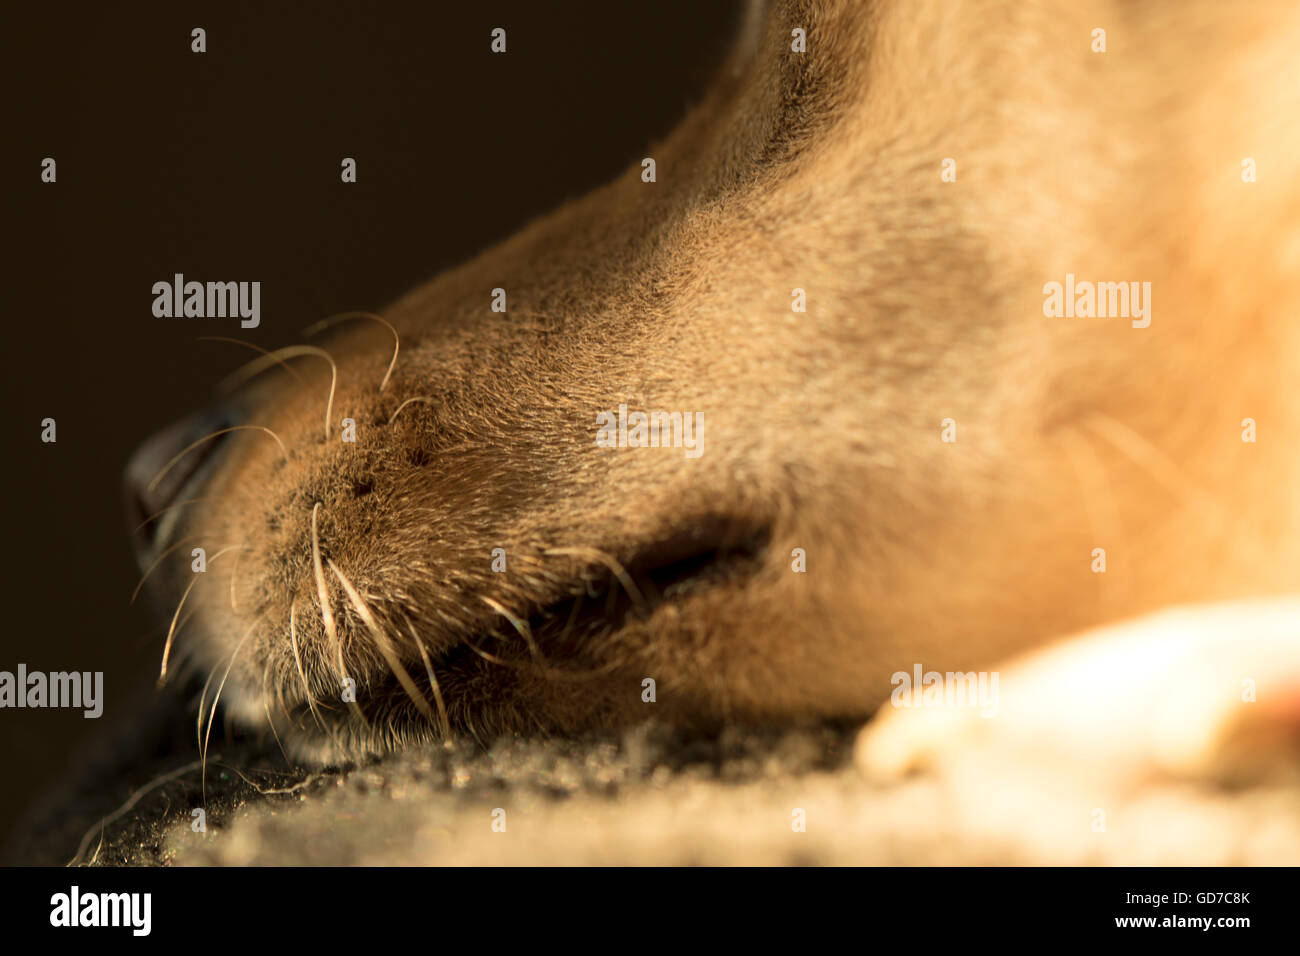 sleeping dog muzzle and whiskers Stock Photo